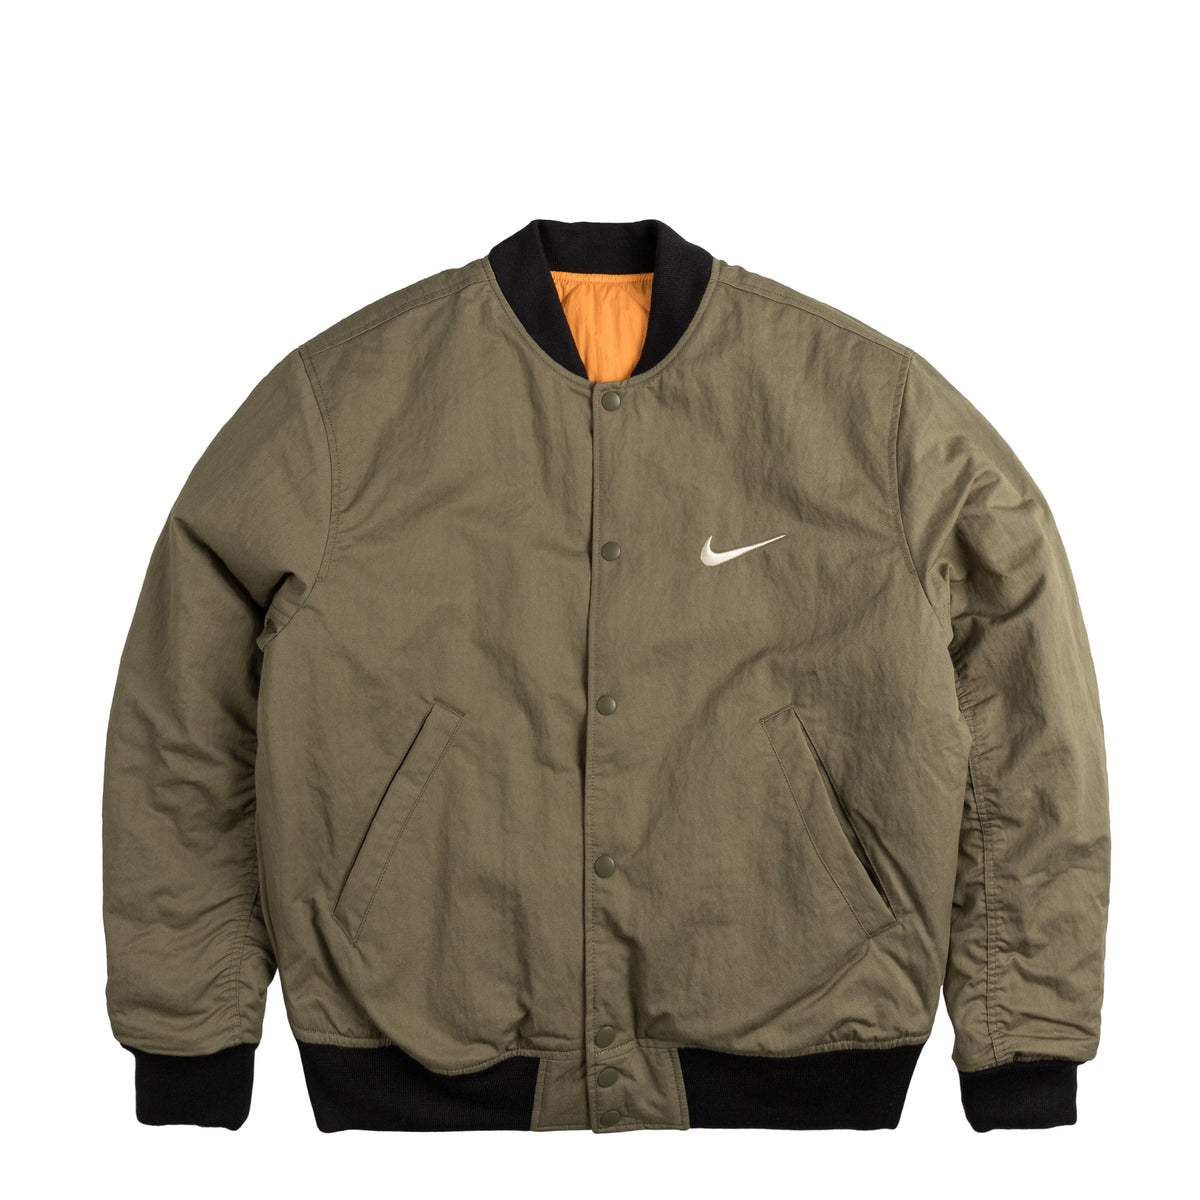 Nike x Stussy Reversible Jacket – buy now at Asphaltgold Online Store!